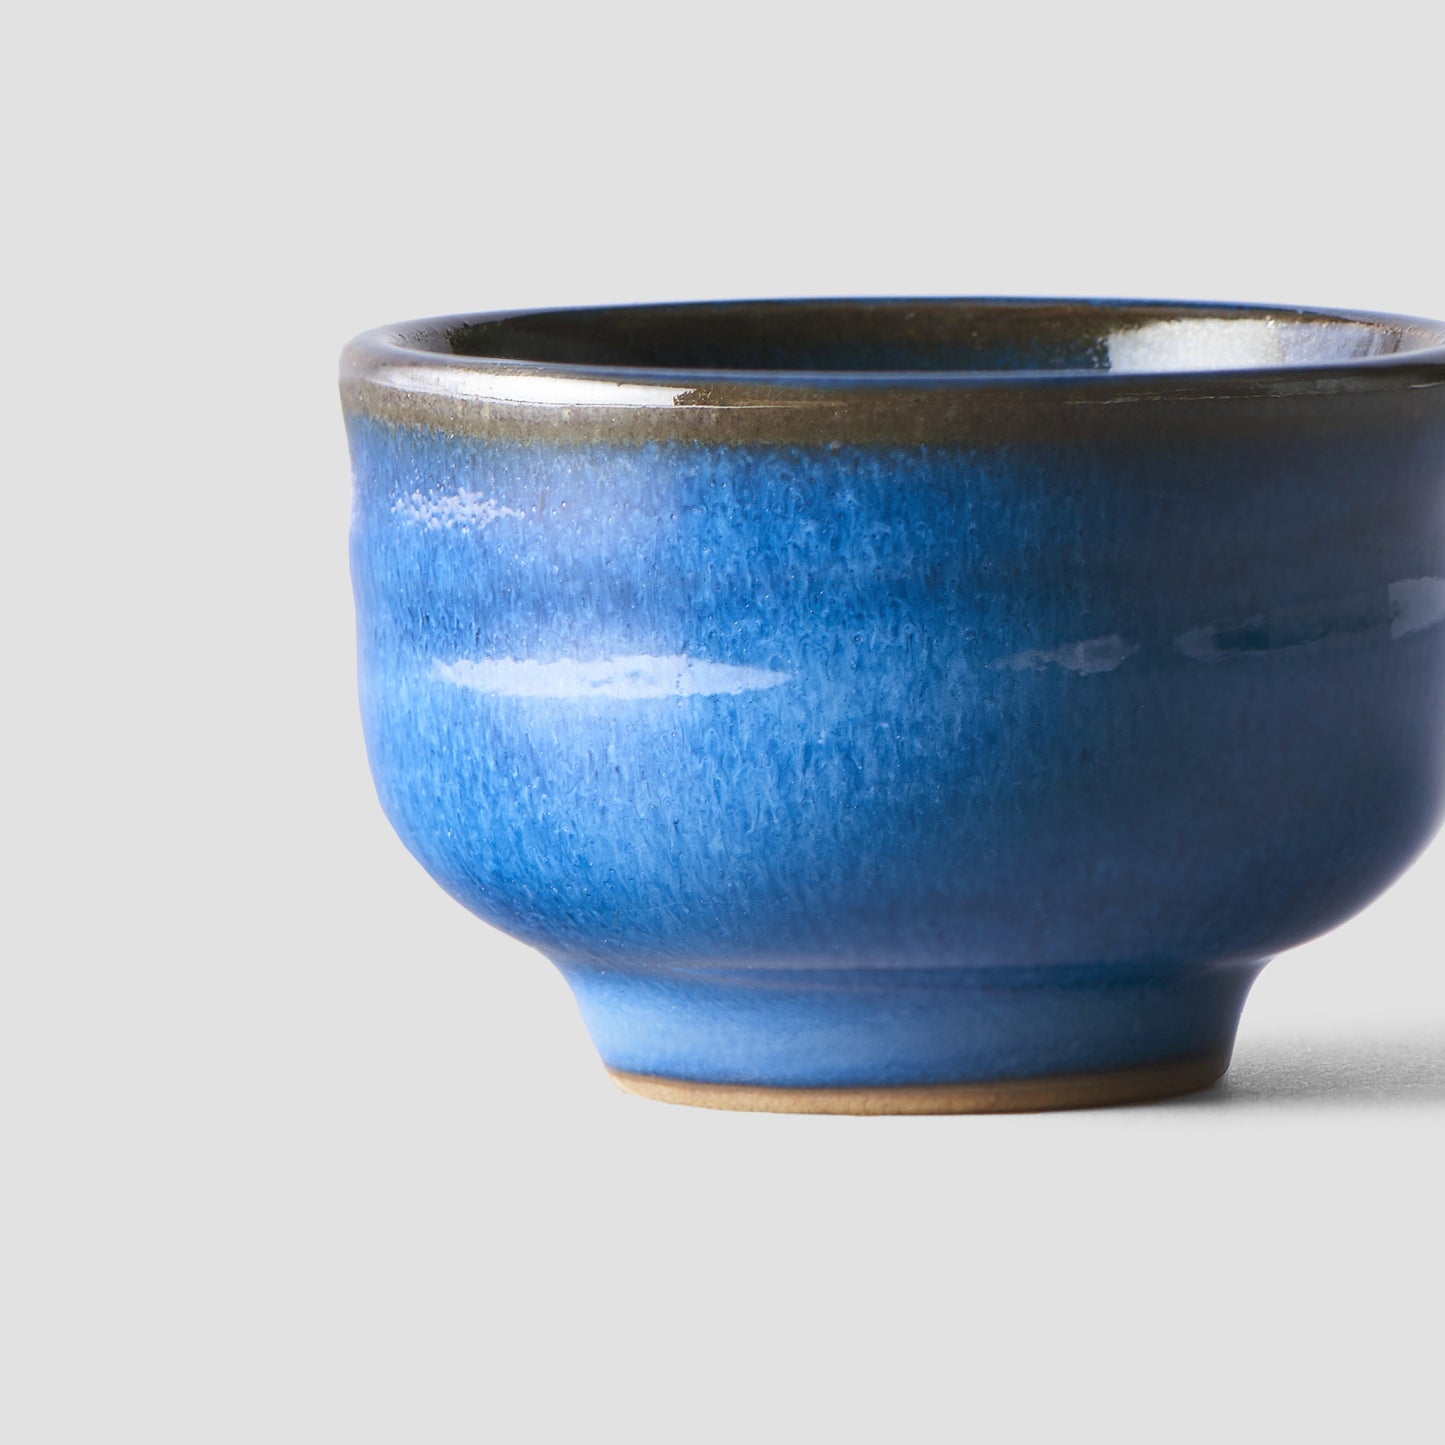 Sake cup open shape bright blue 3.5cm